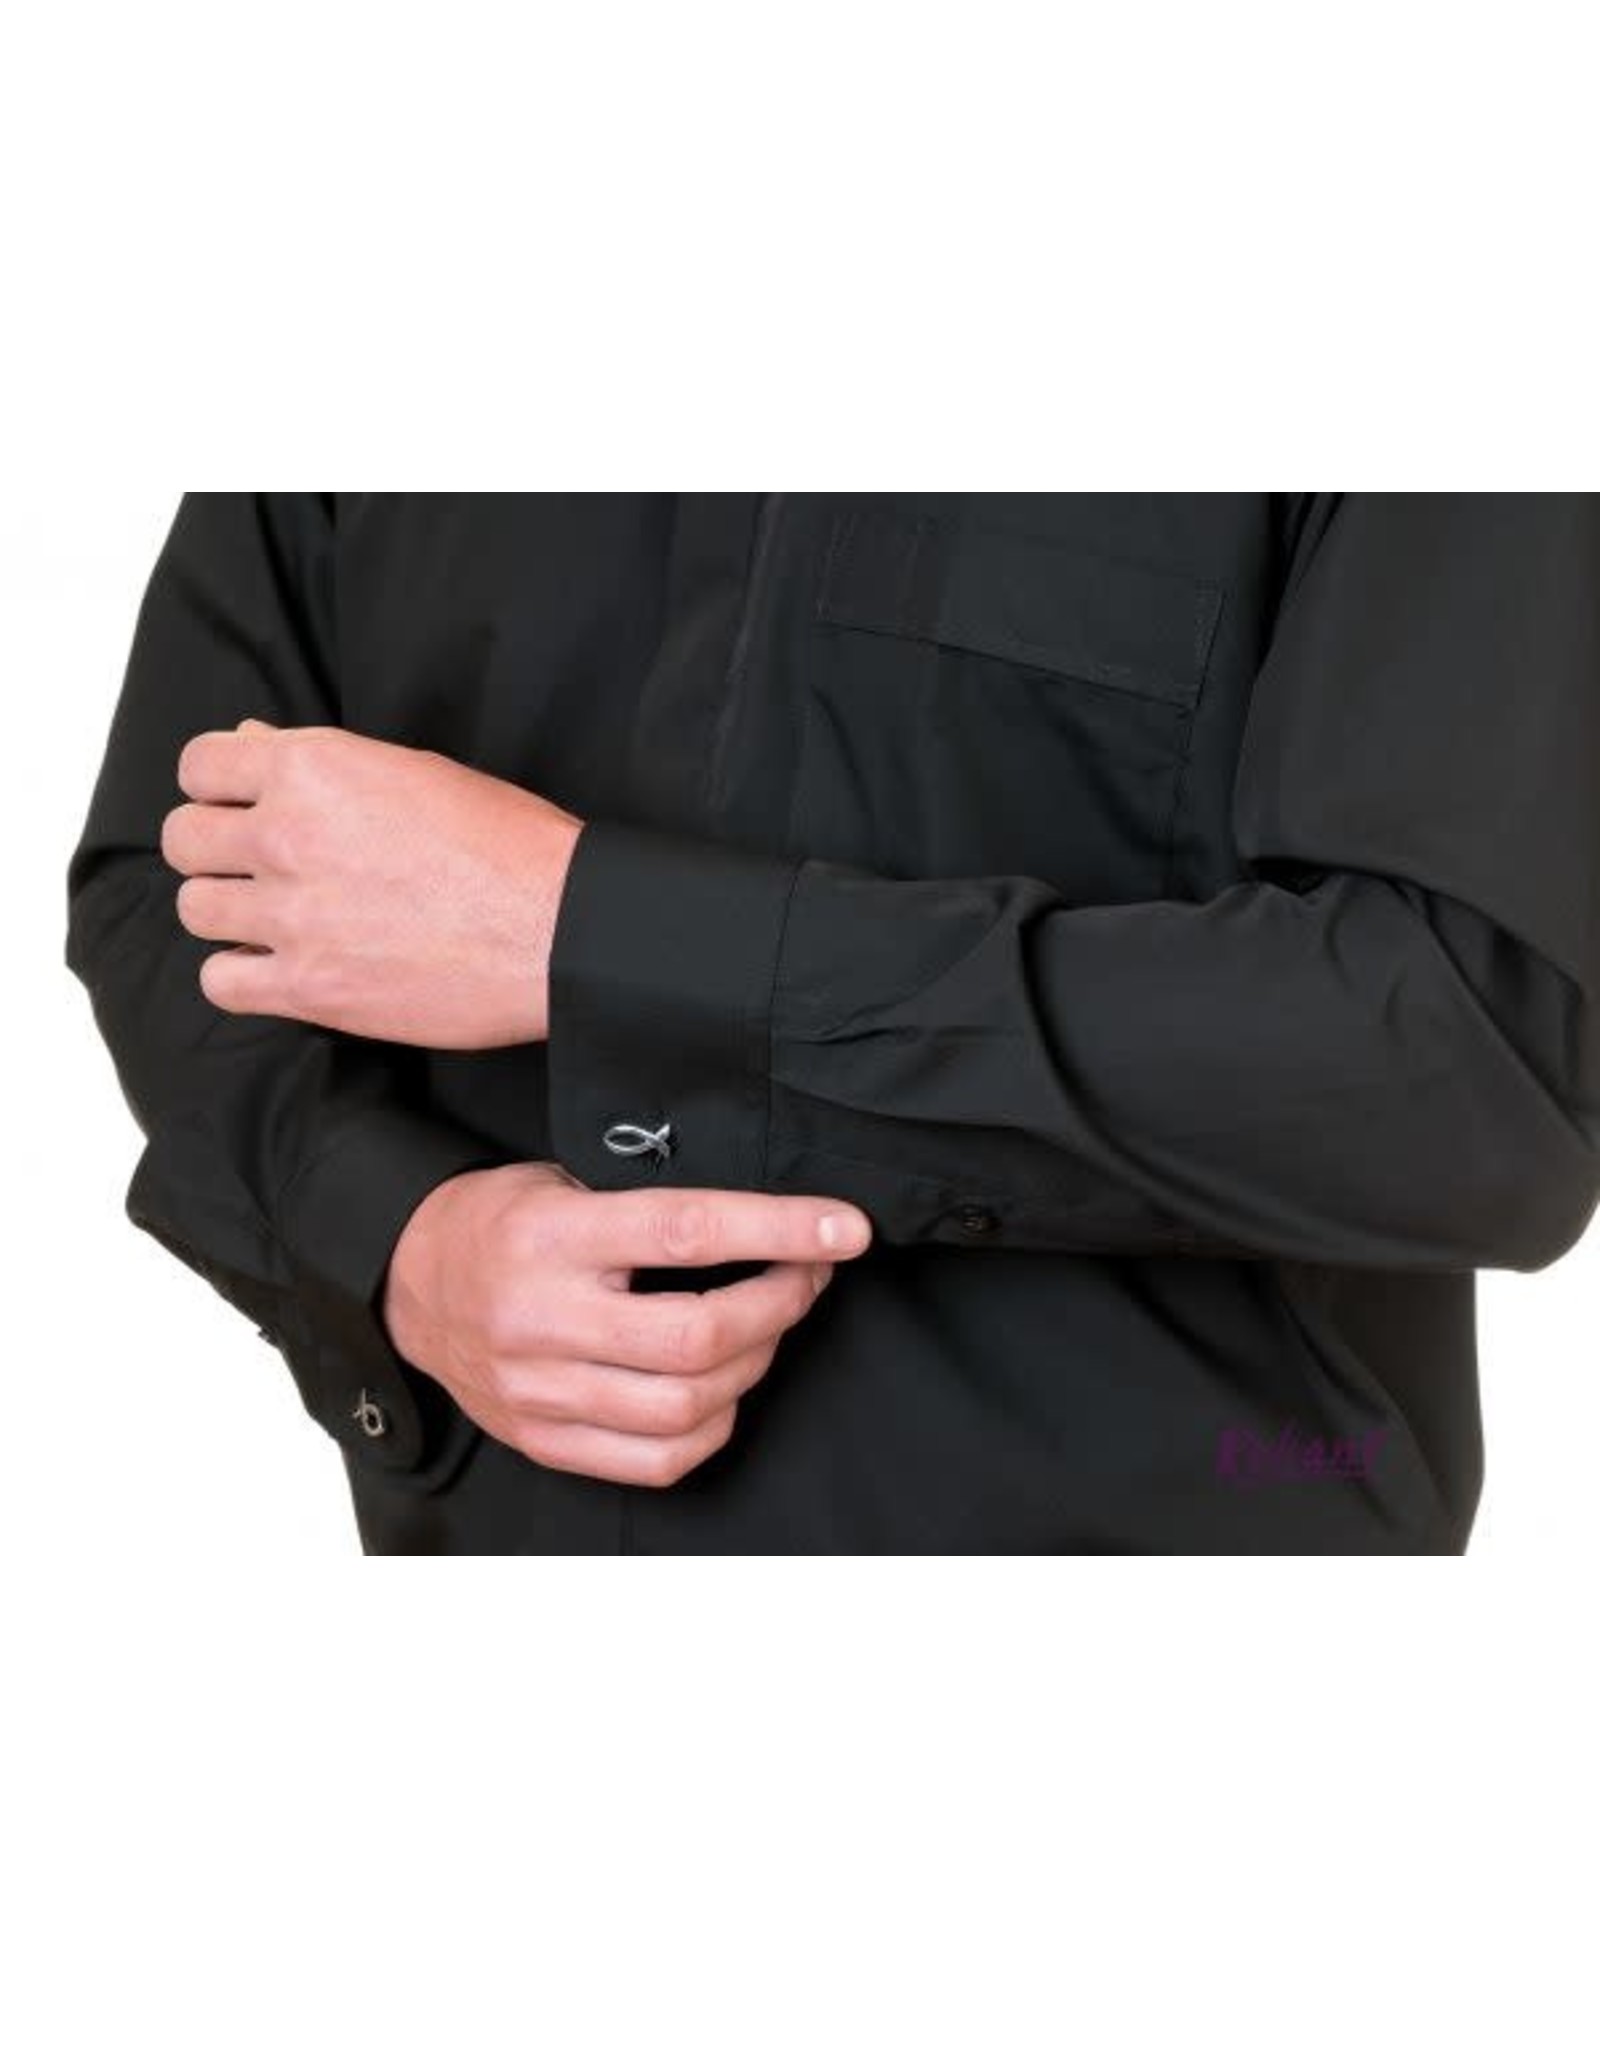 Reliant Clergy Shirt S7151 Tonsure Long Sleeve -